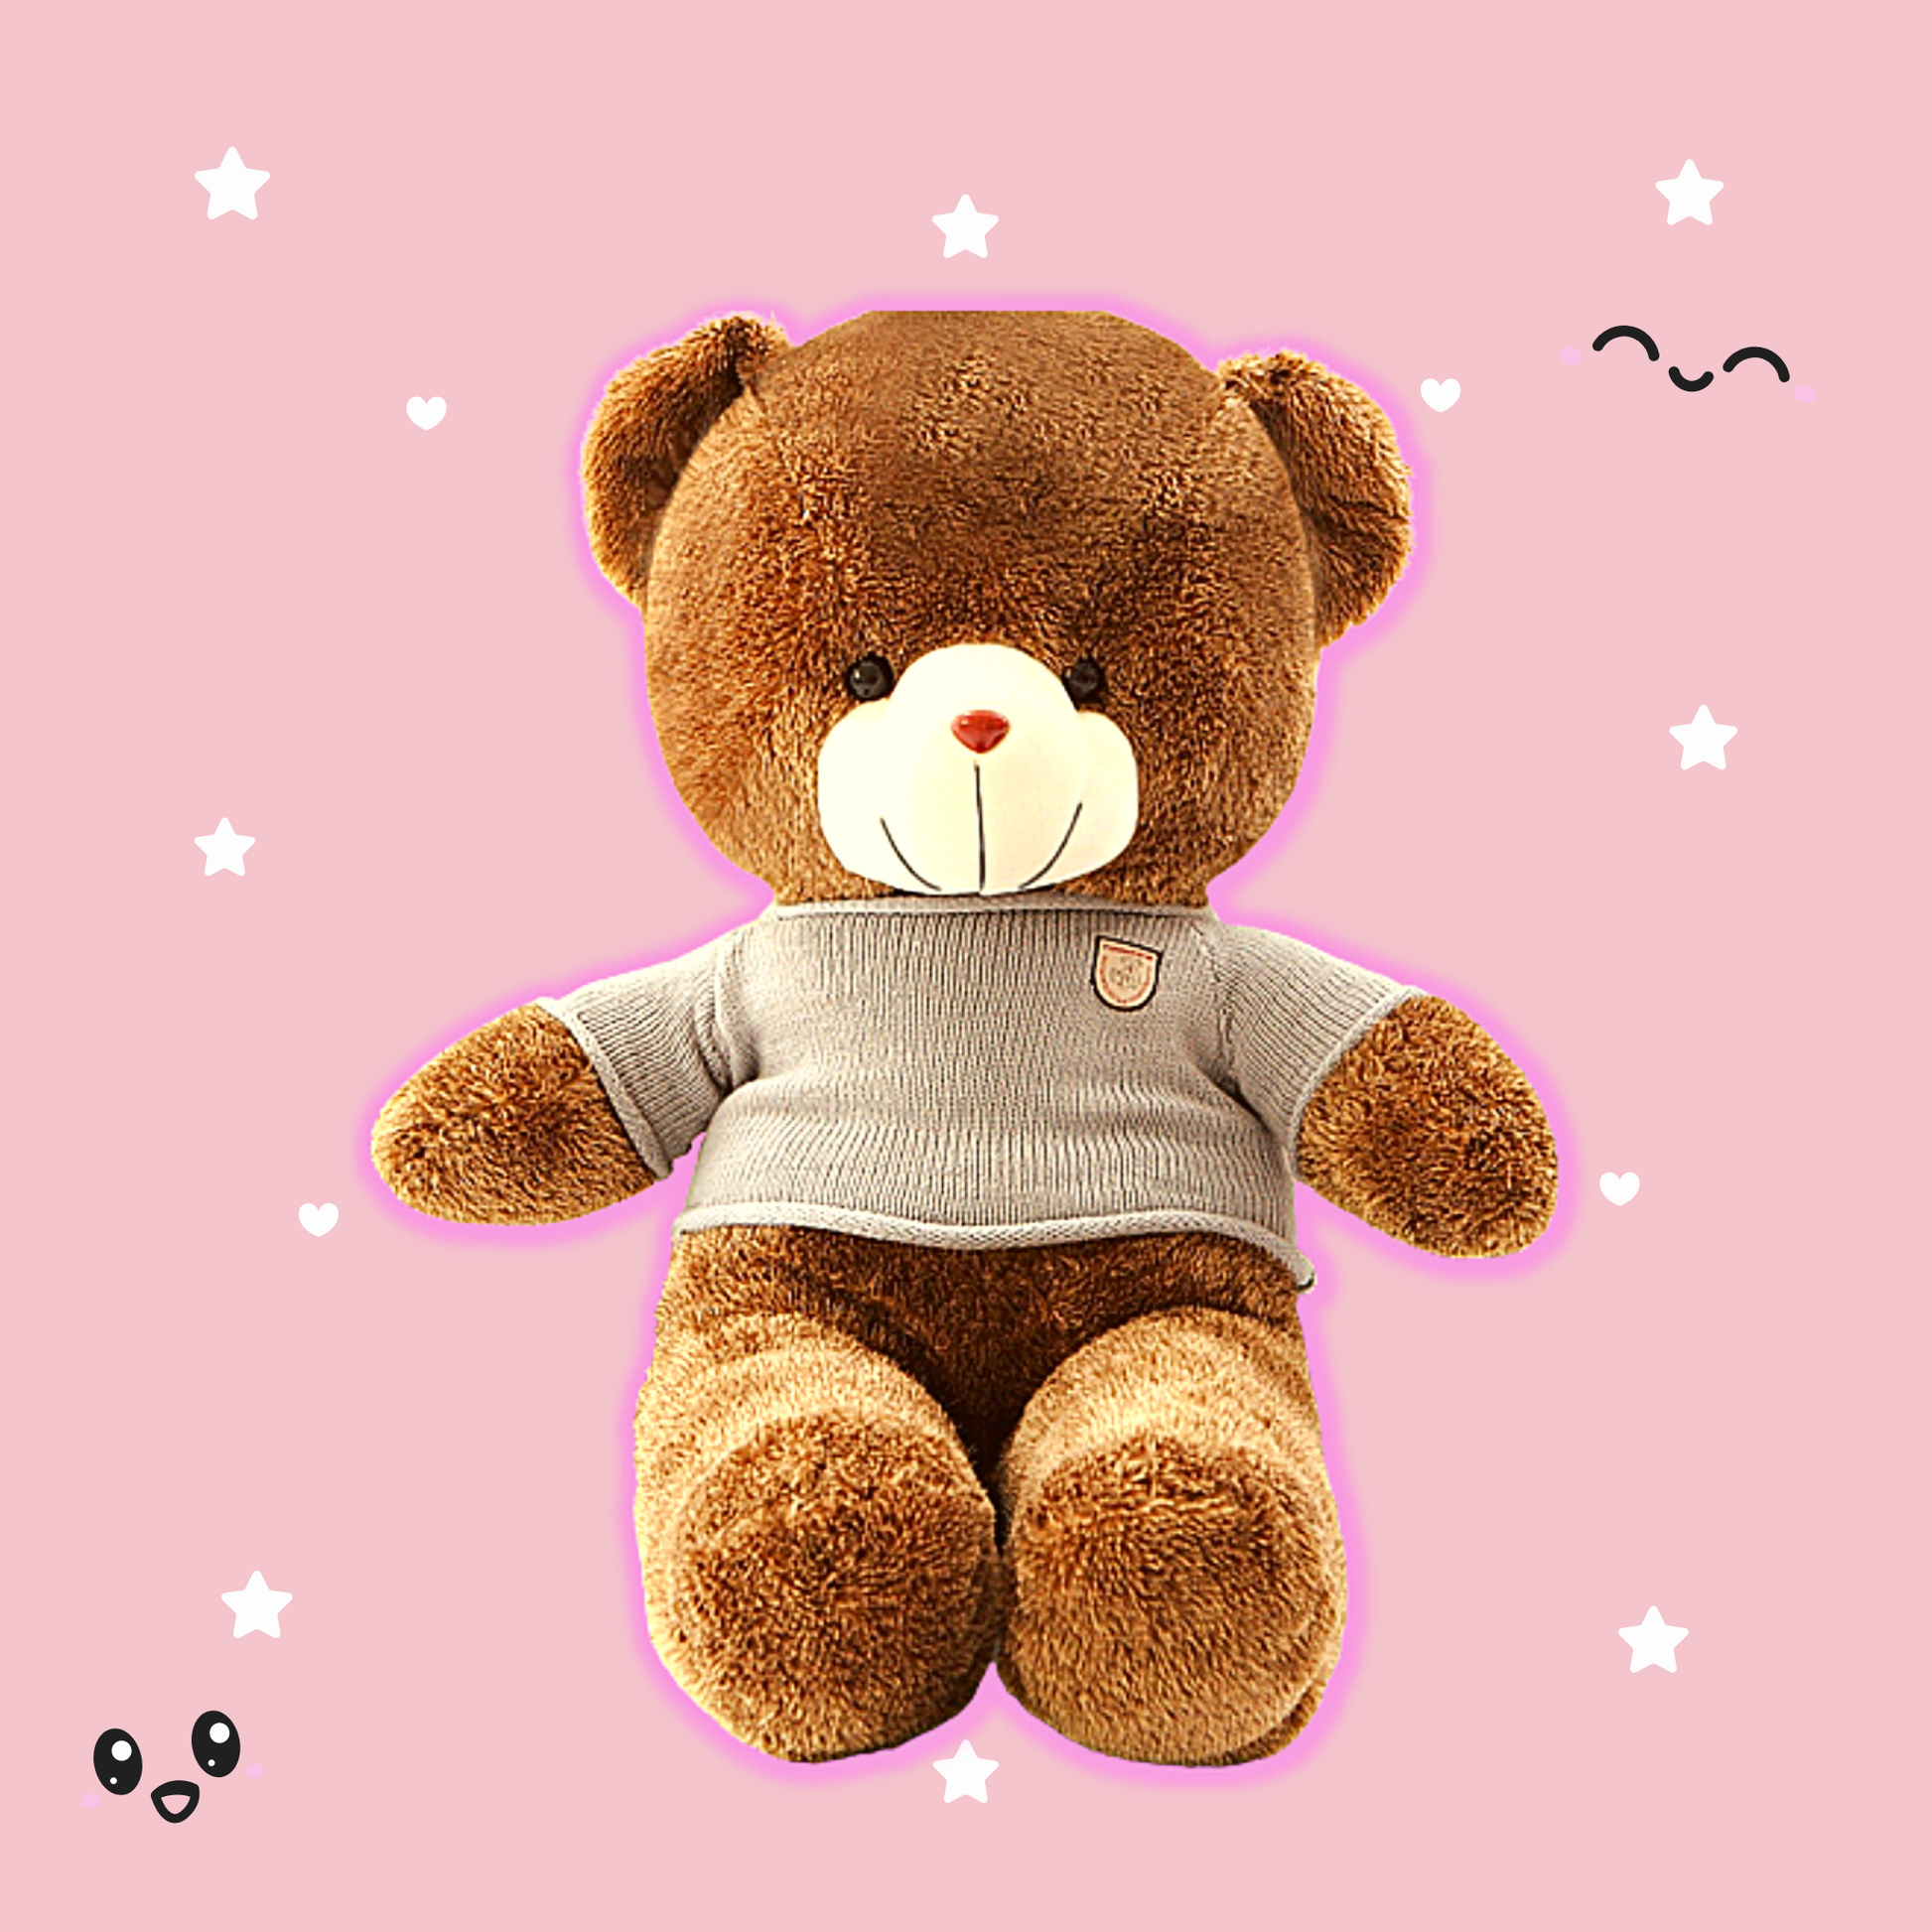 Shop BeanBuddy: Giant Life Size Teddy Bear (6.5ft) - Stuffed Animals Goodlifebean Plushies | Stuffed Animals